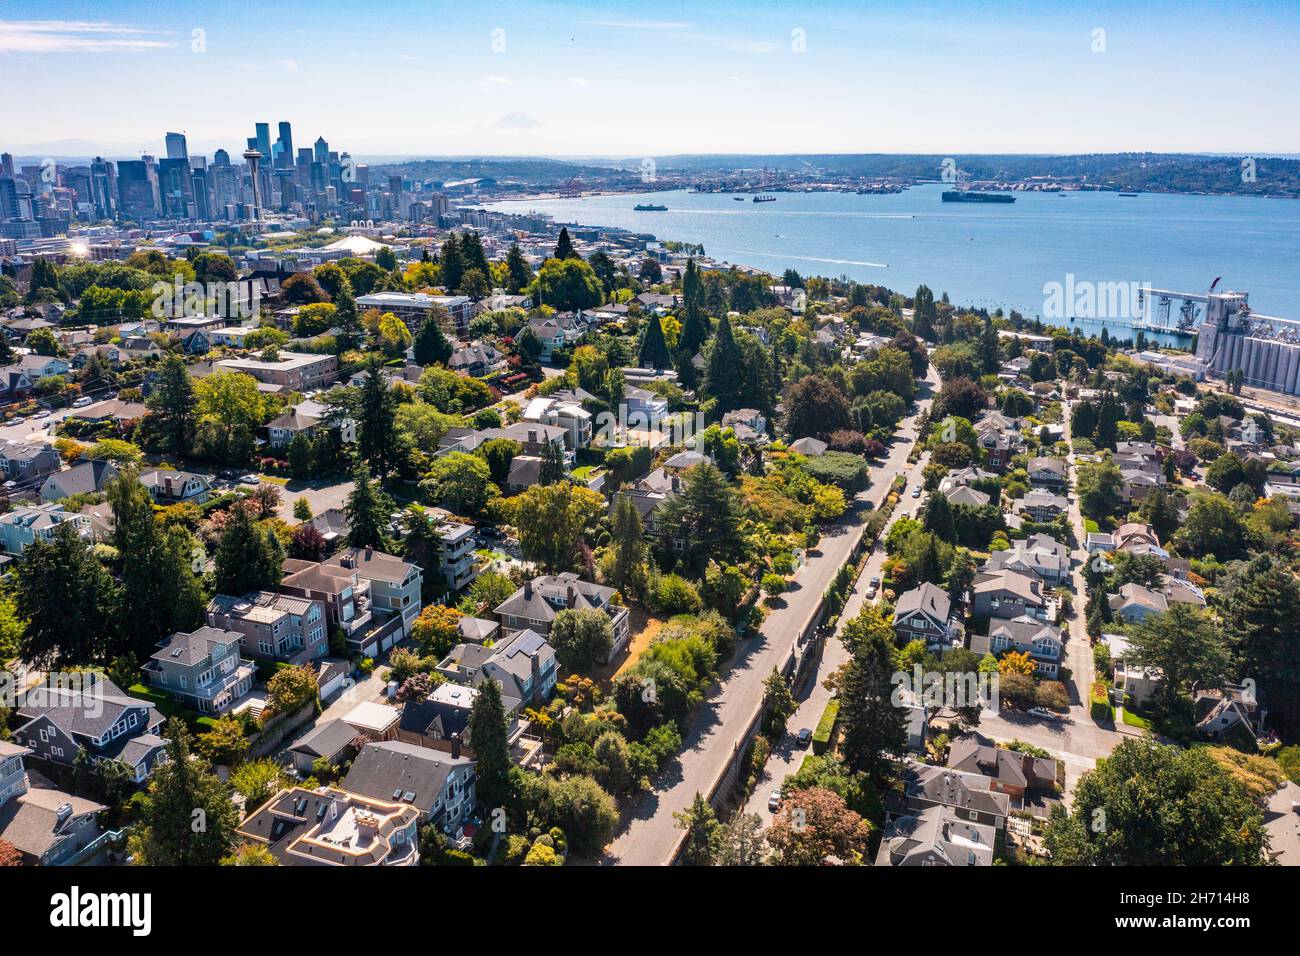 Queen Anne neighborhood in Seattle, Washington, USA Stock Photo